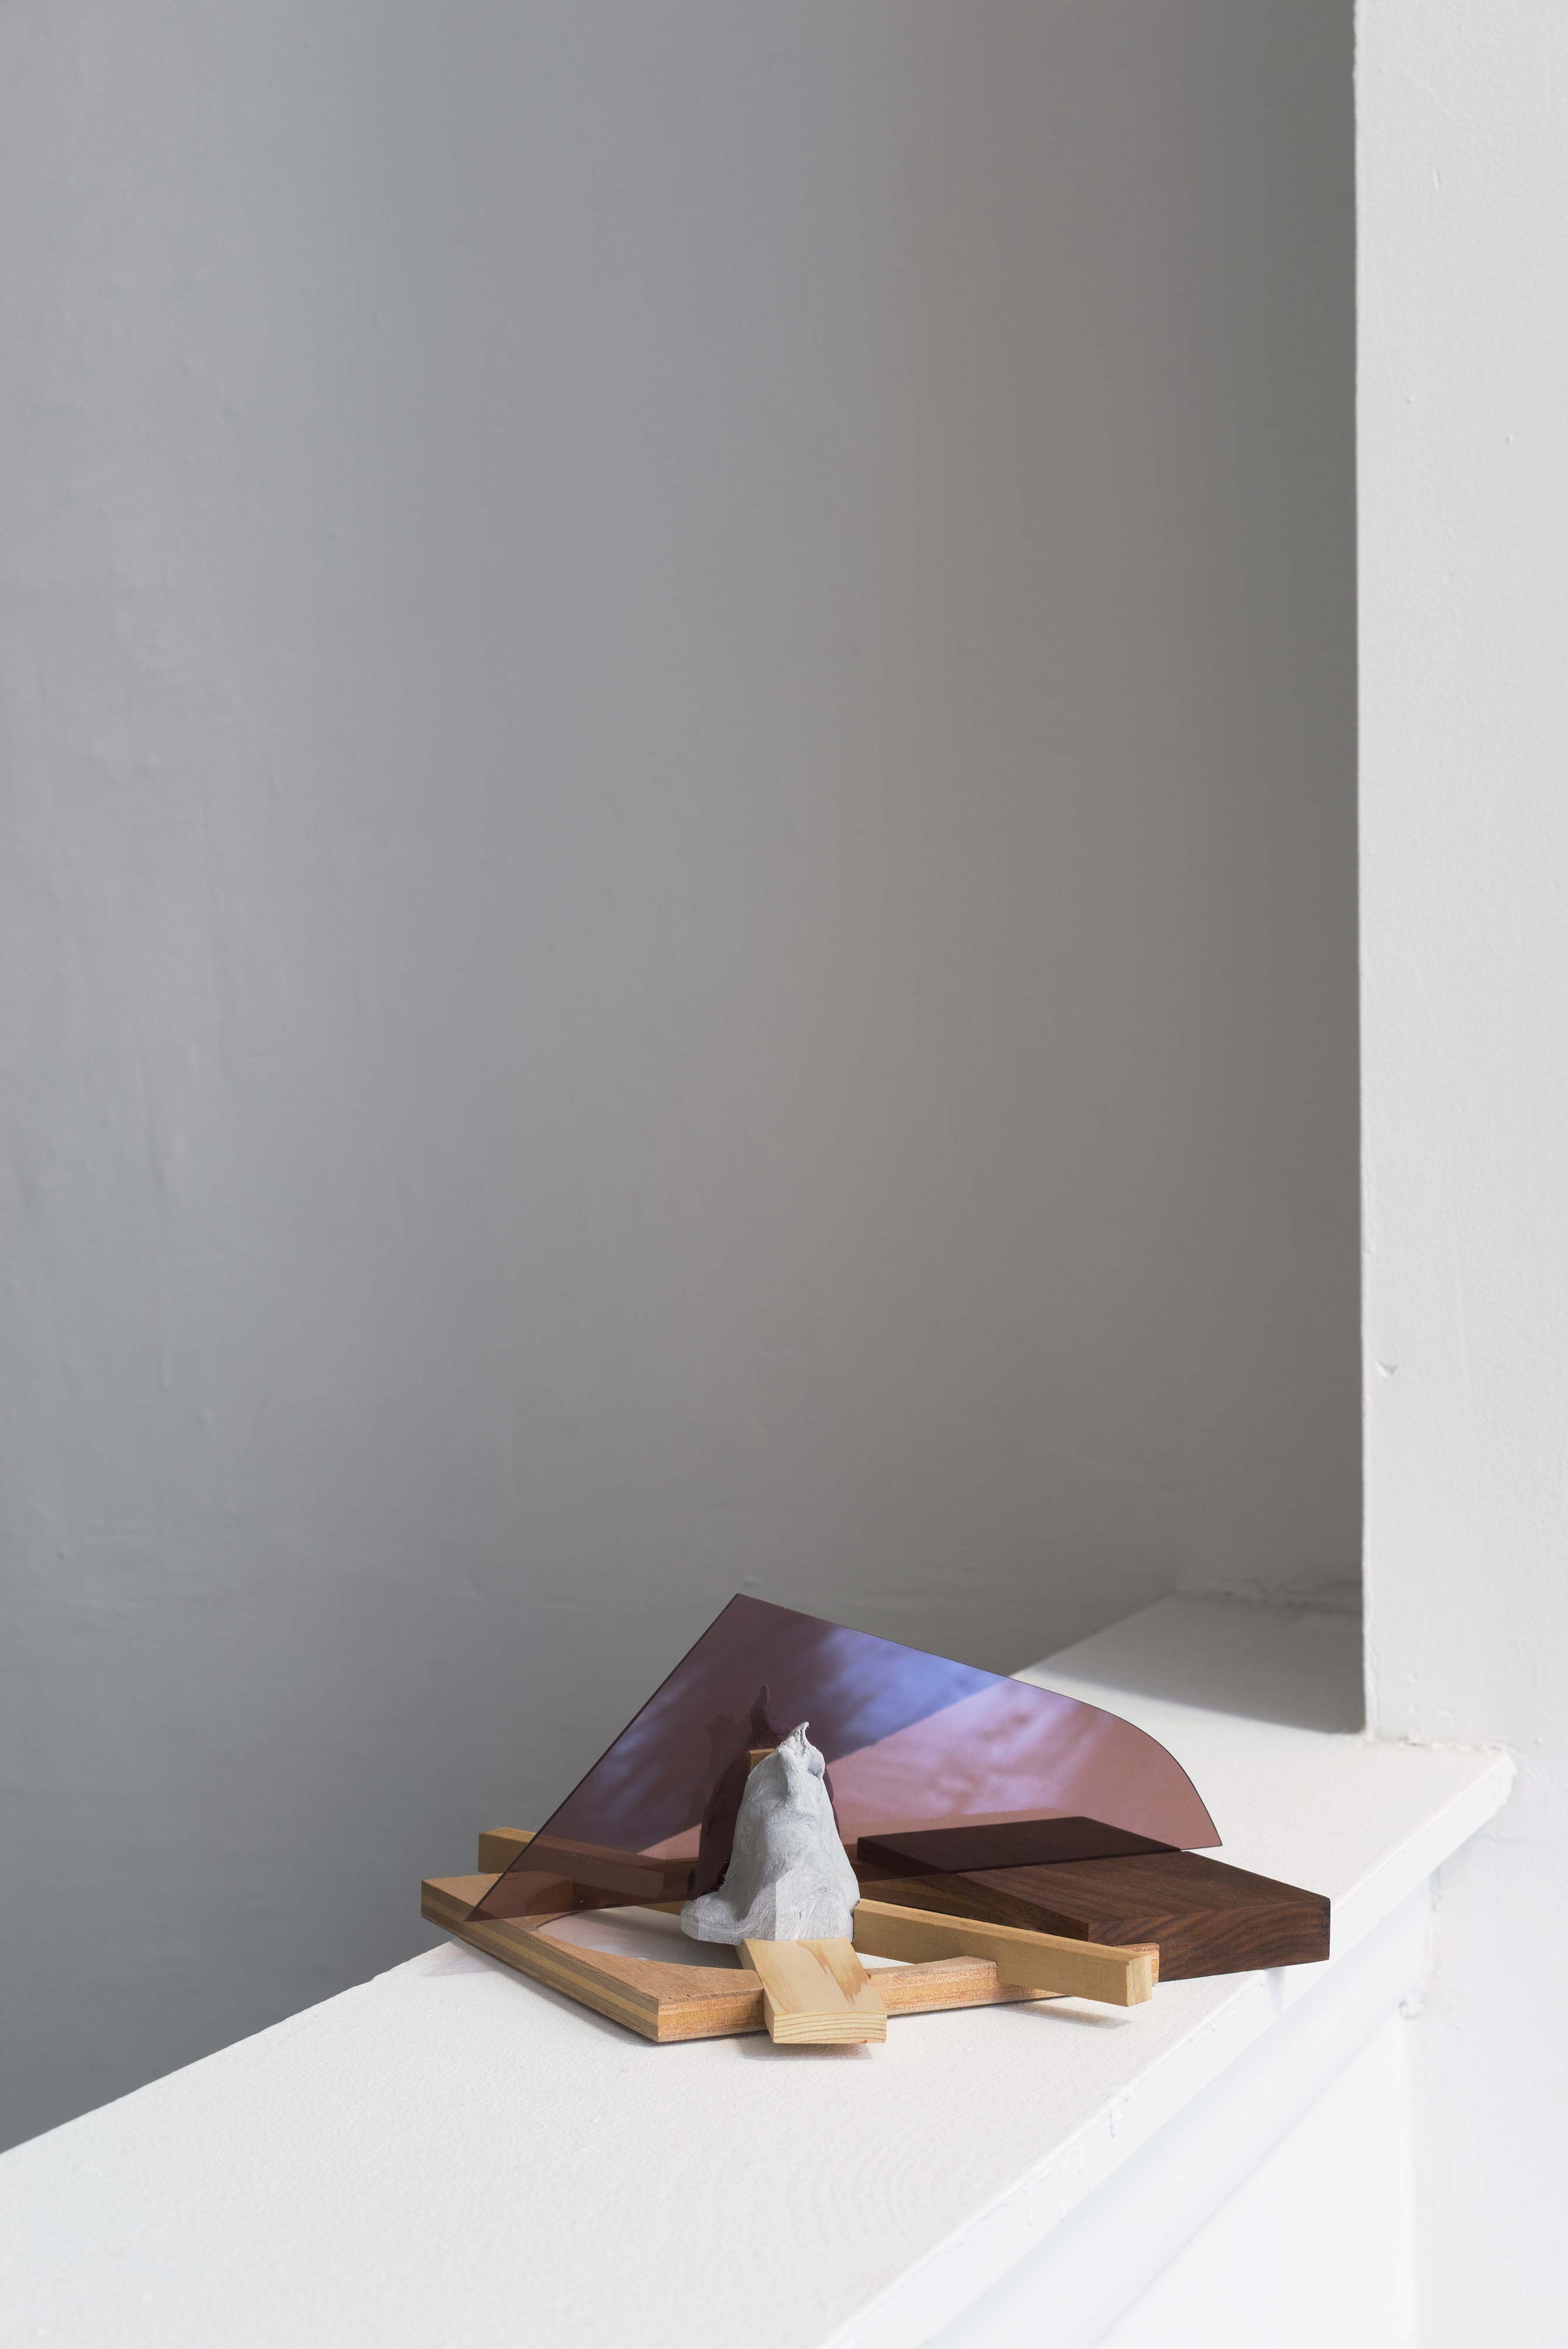 Krister Olsson<br>Campfire<br>2013<br>Wood, Acrylic, Clay<br>4.7 x 10 x 10.5 in (12 cm x 25 cm x 27 cm)